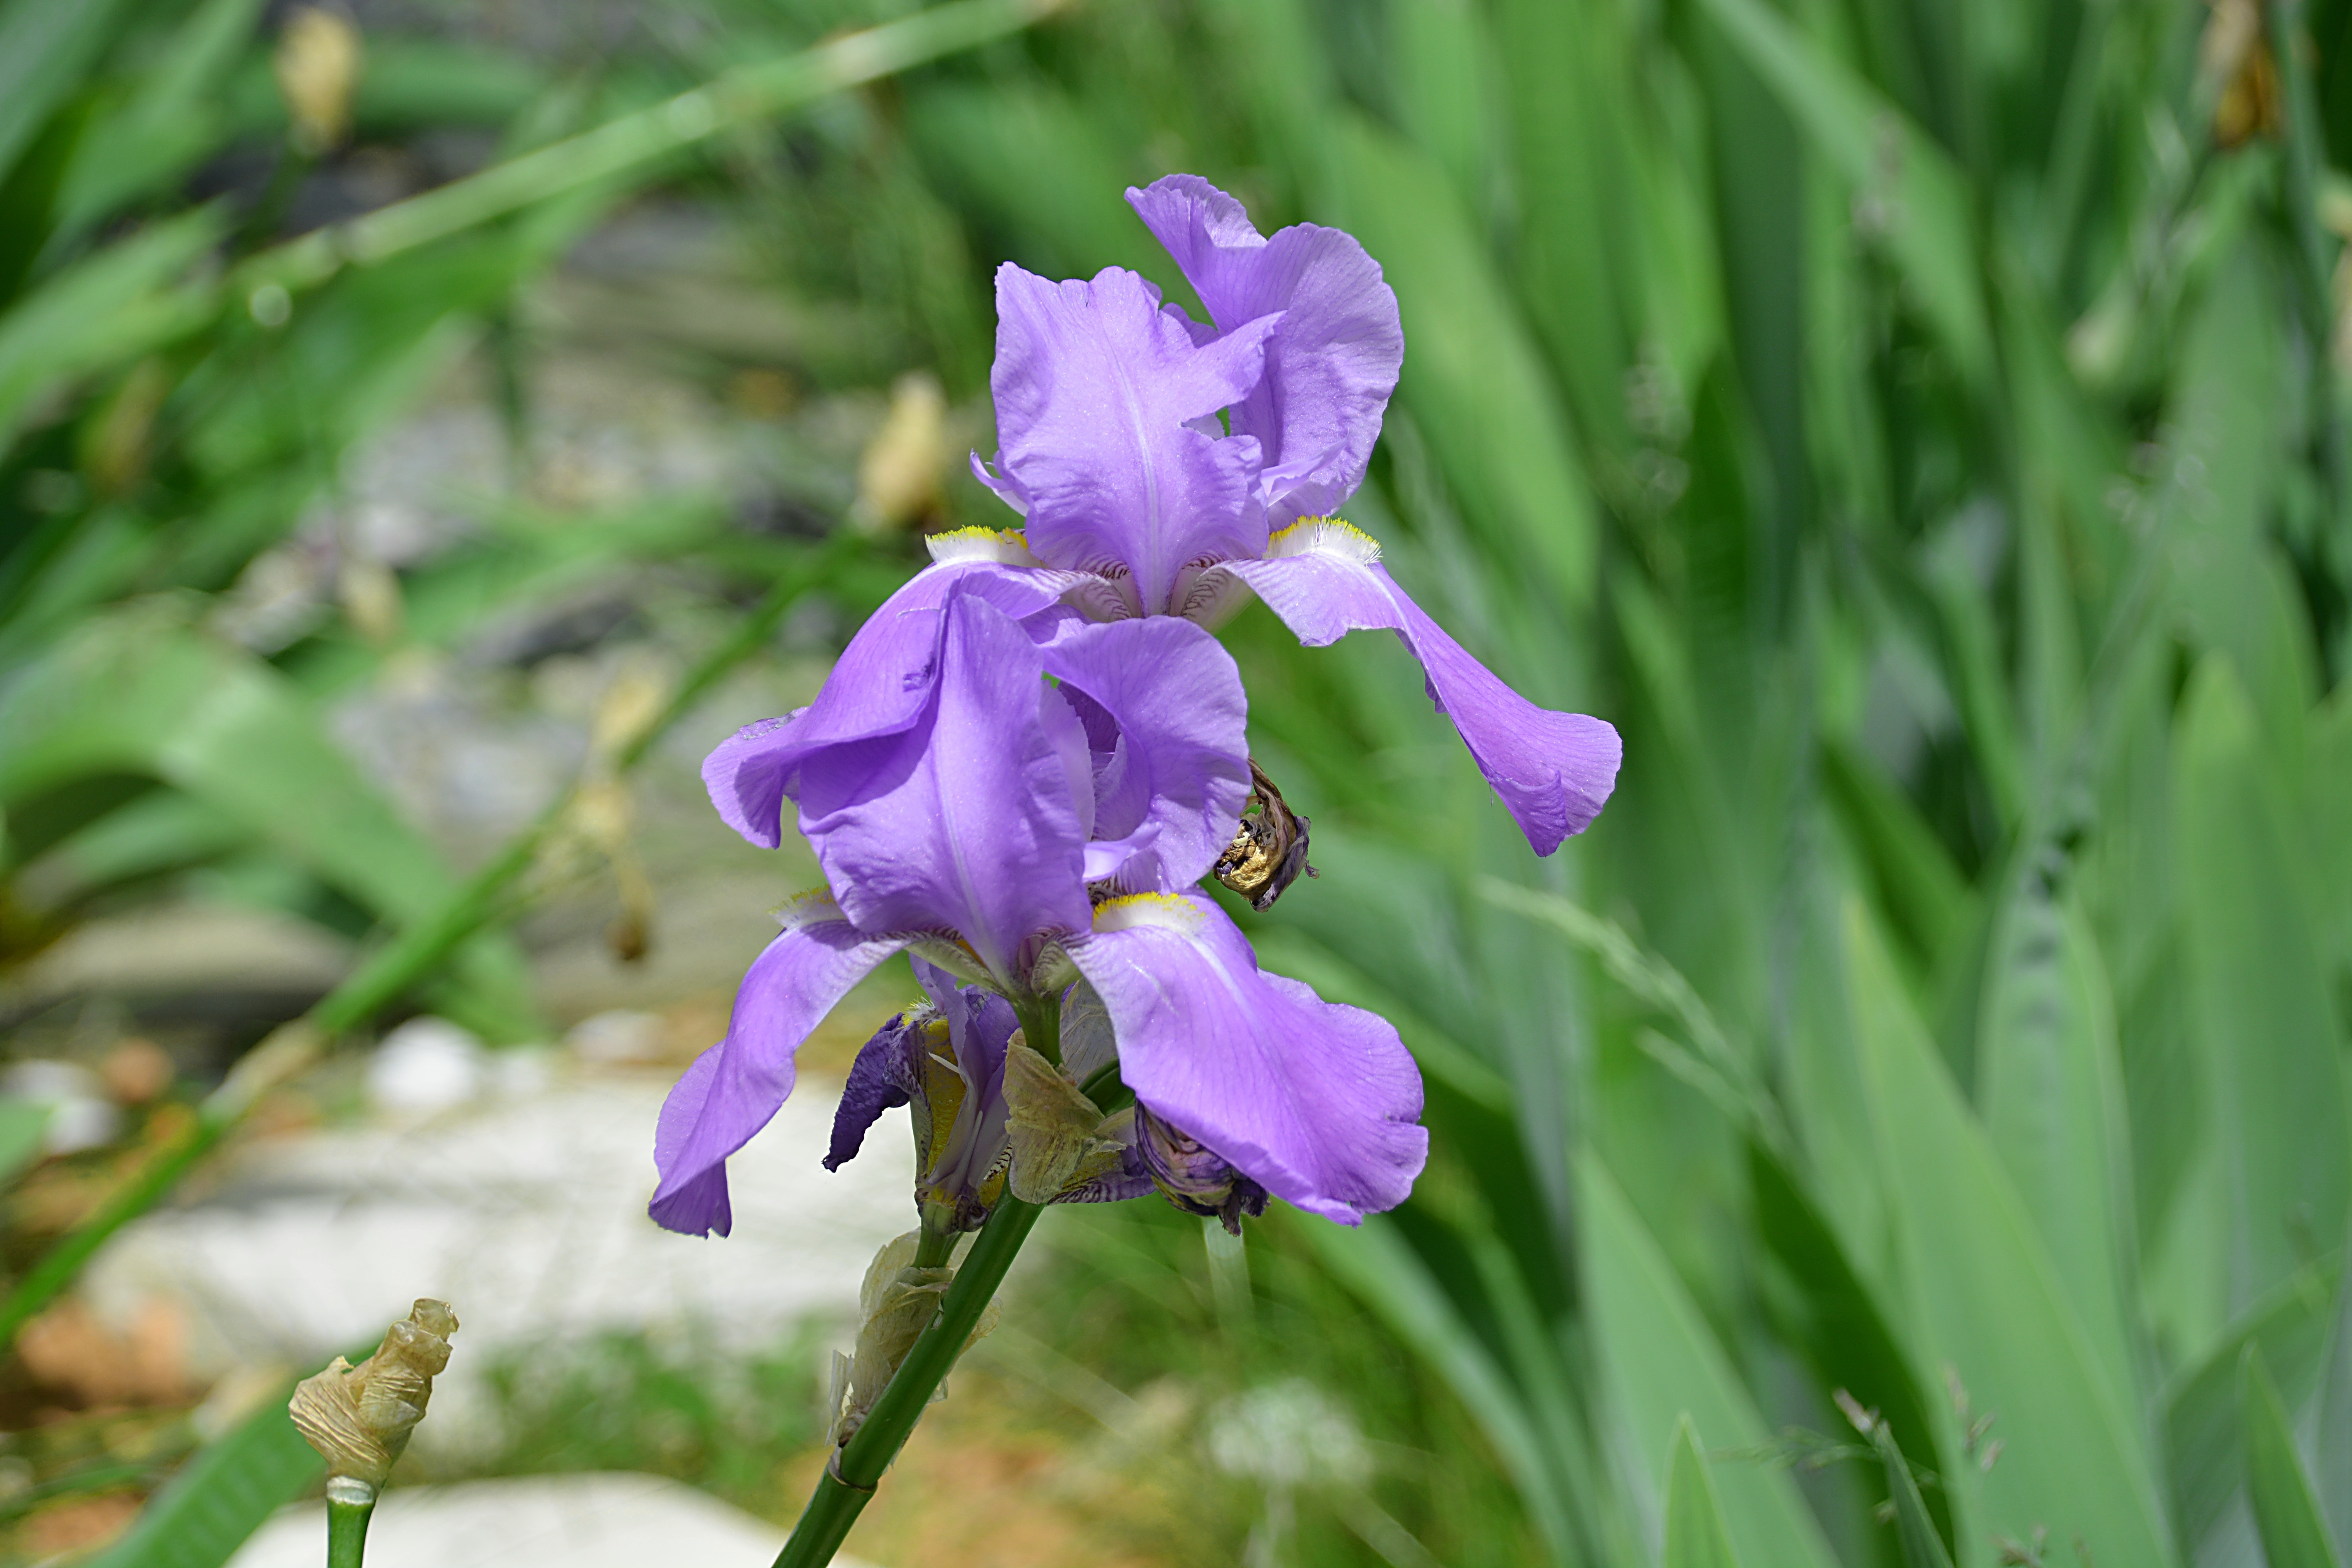 Iris, Iris Flowers, Flower, Garden, flower, purple